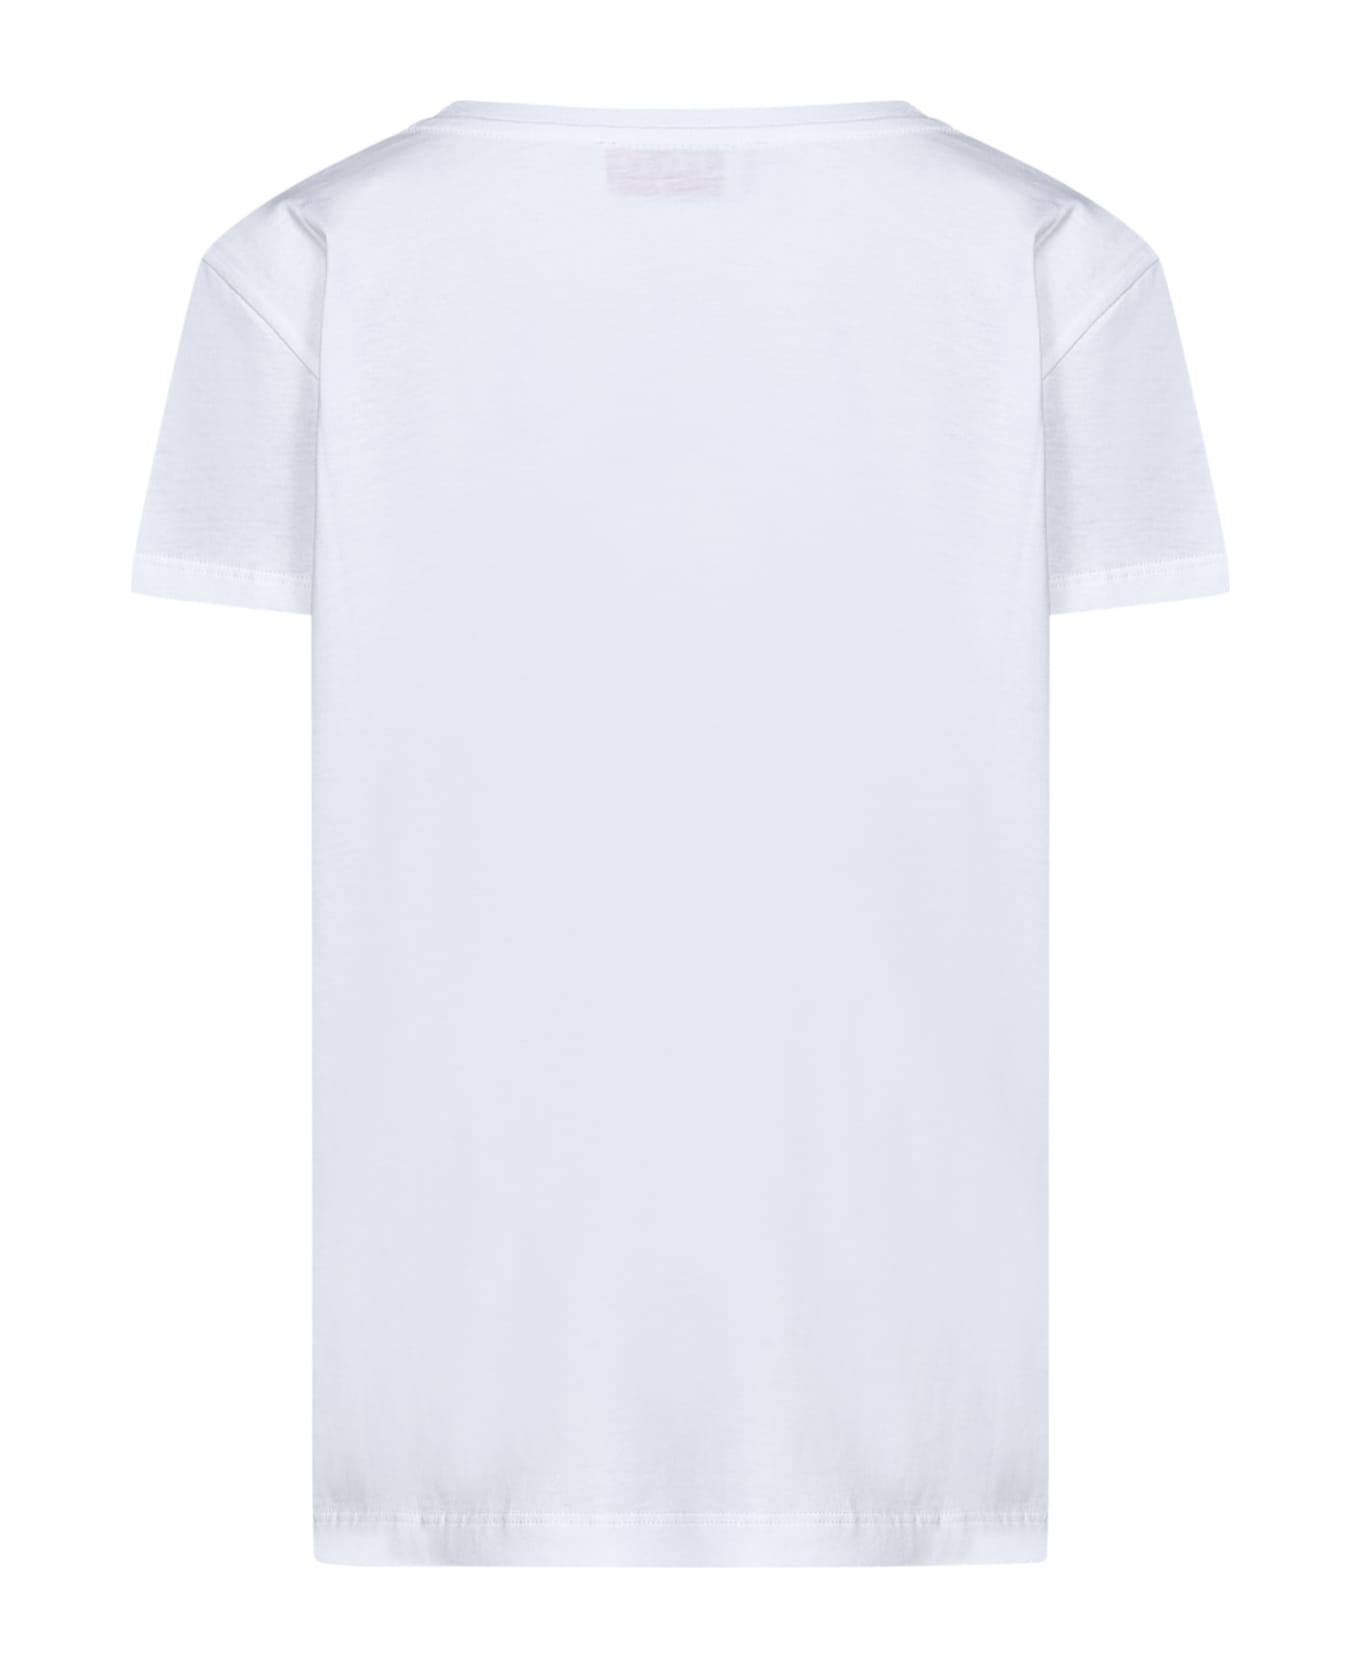 Pucci Emilio  Kids T-shirt - White